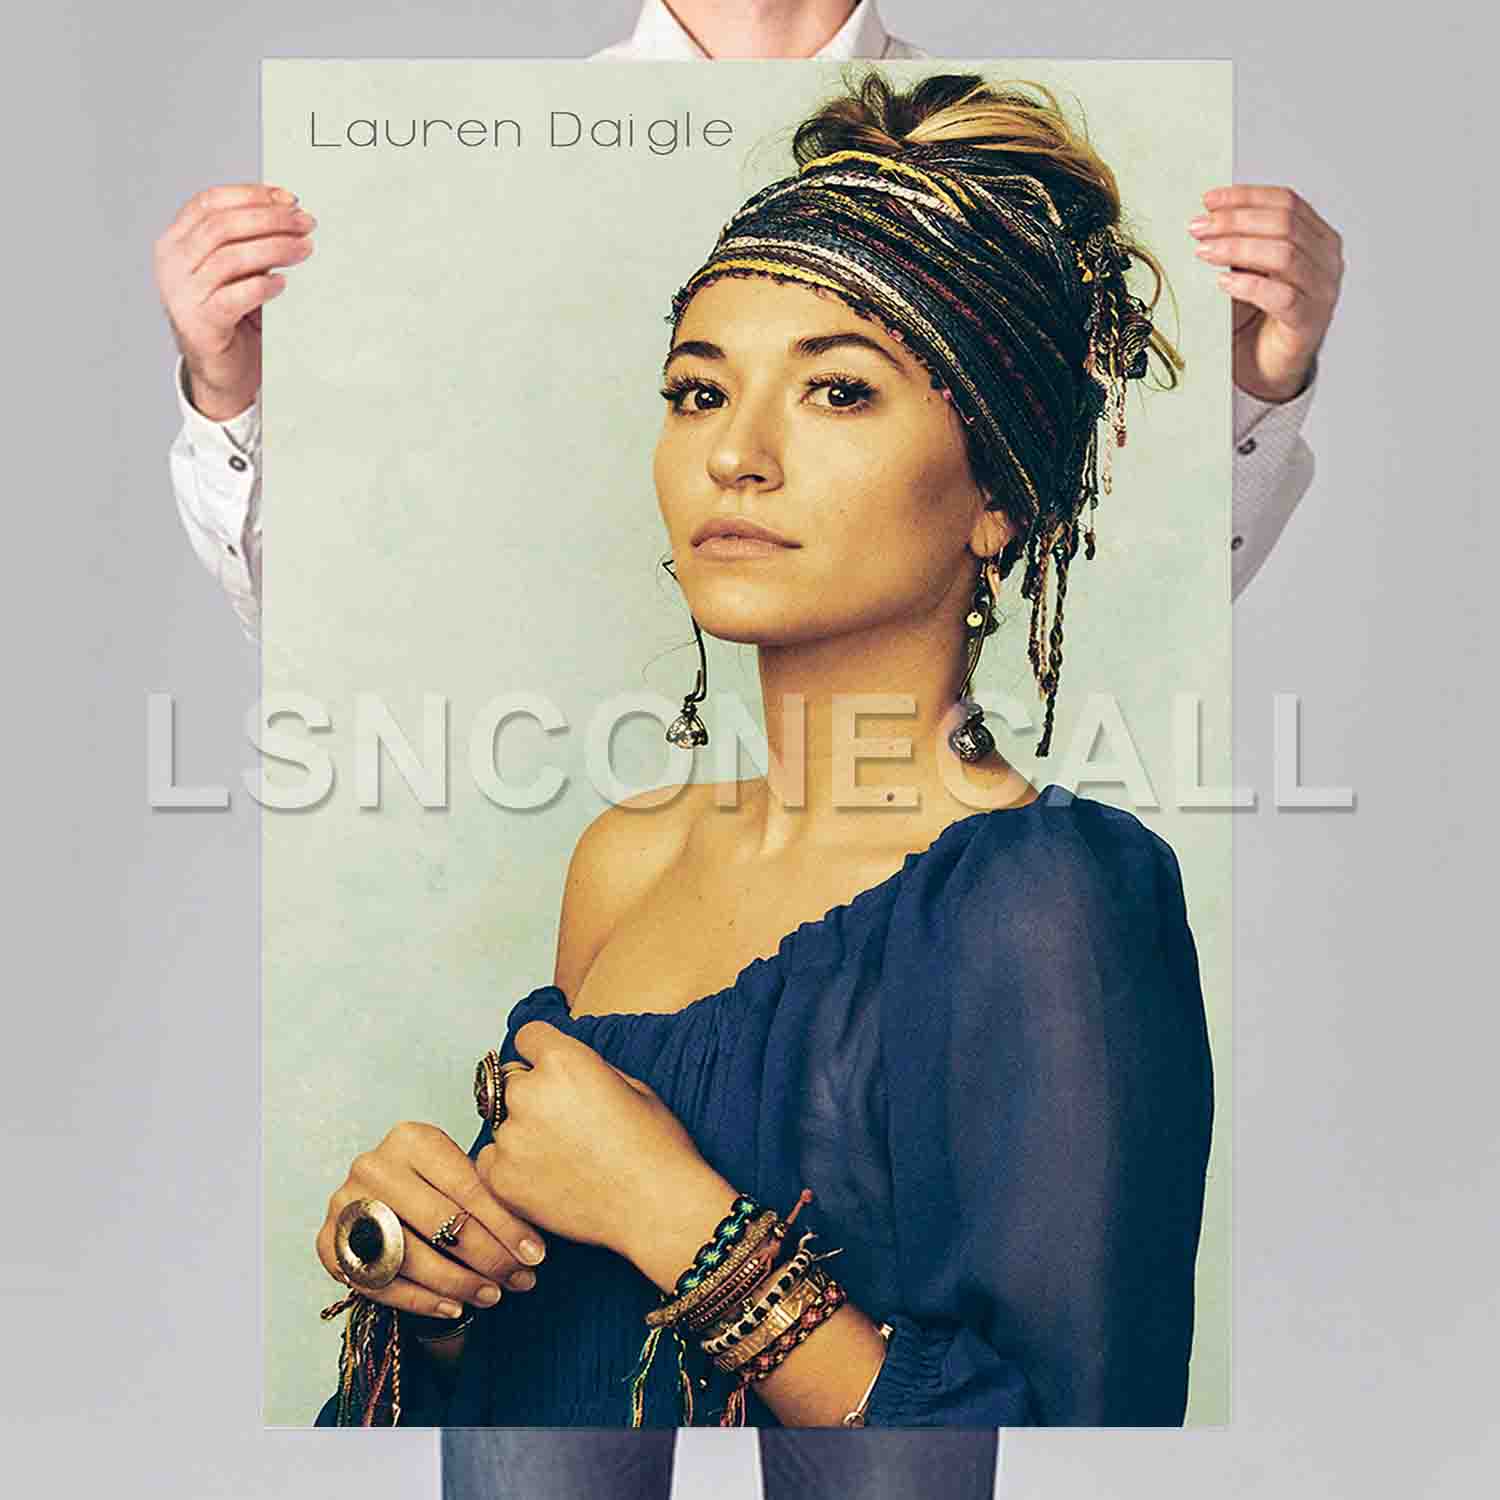 Lauren Daigle Poster Print Art Wall Decor lsnconecall - lsnconecall.